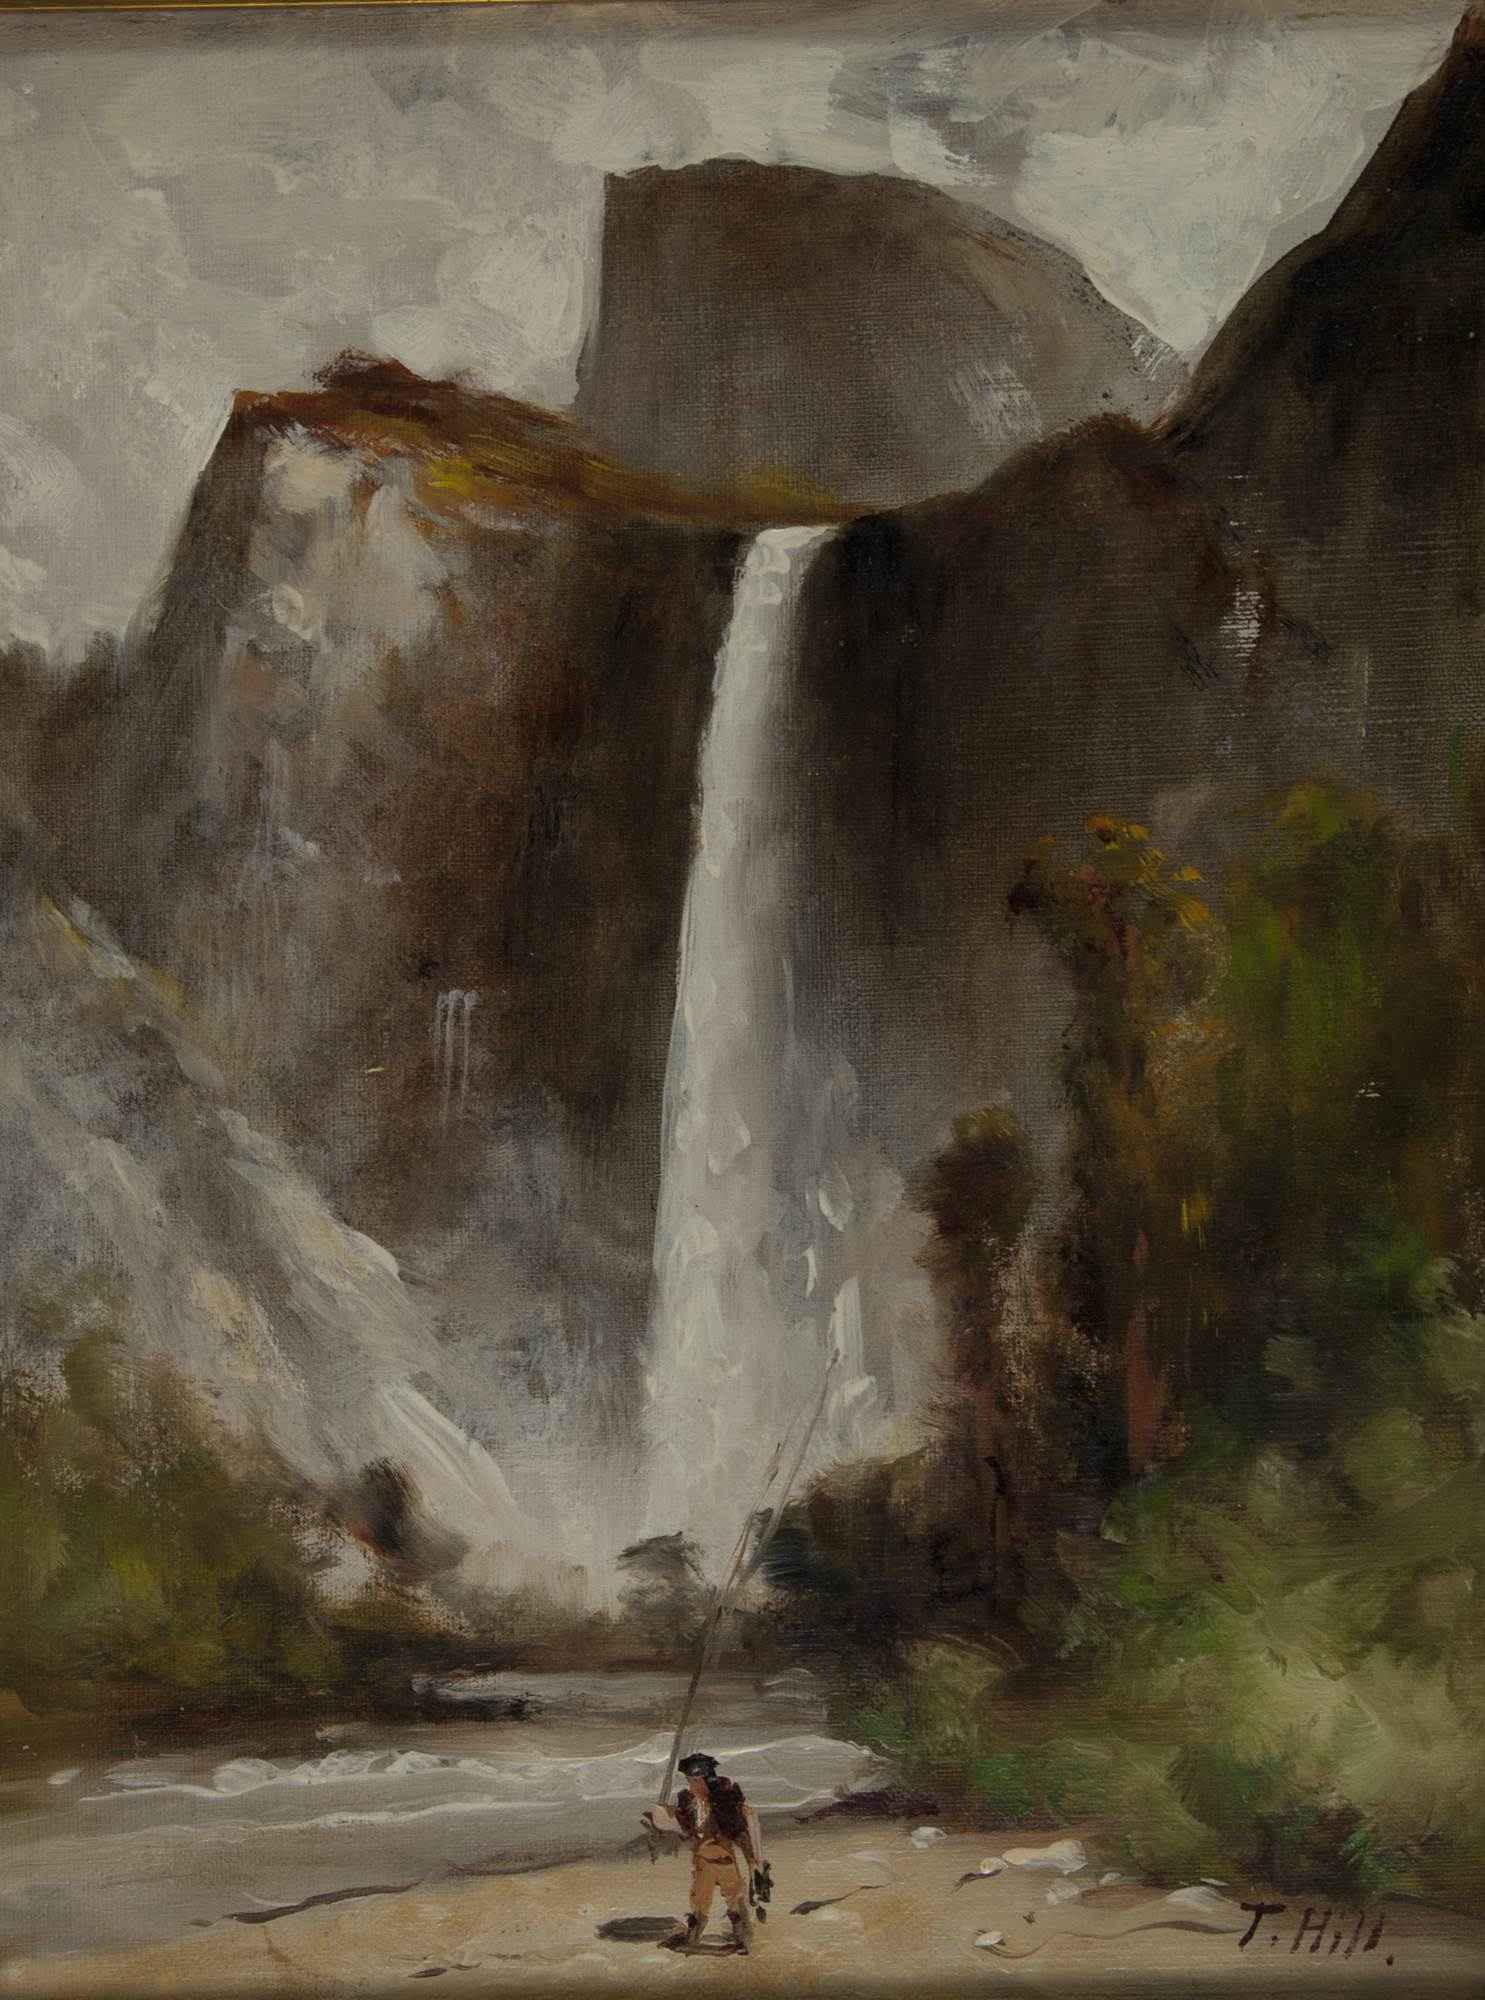 Painting Bridalveil Falls and Cathedral Rock